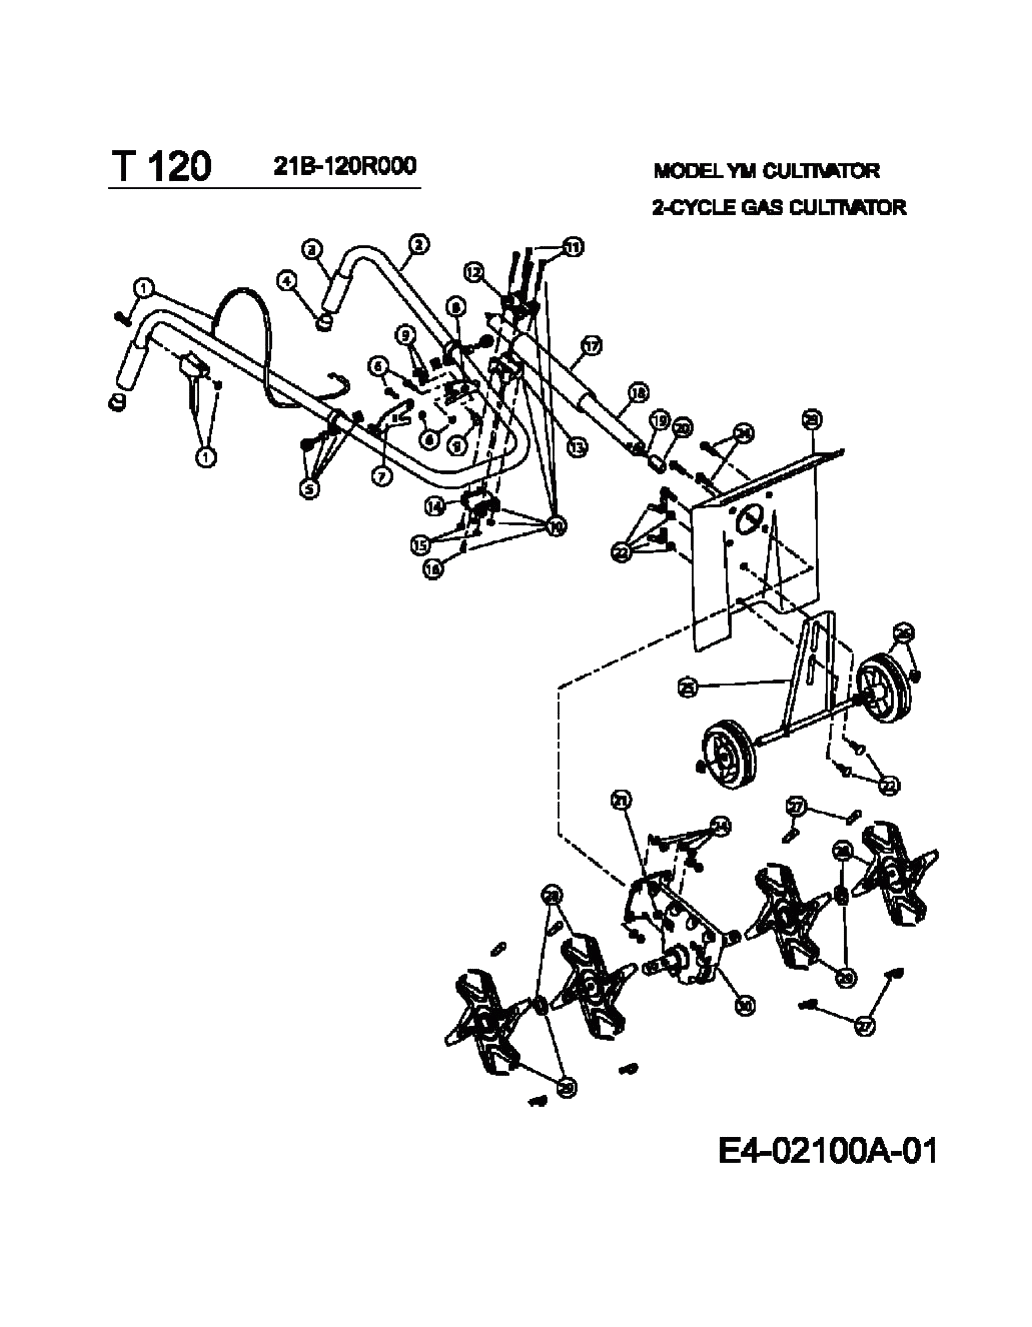 MTD Артикул 21B-120R000 (год выпуска 2004). Основная деталировка